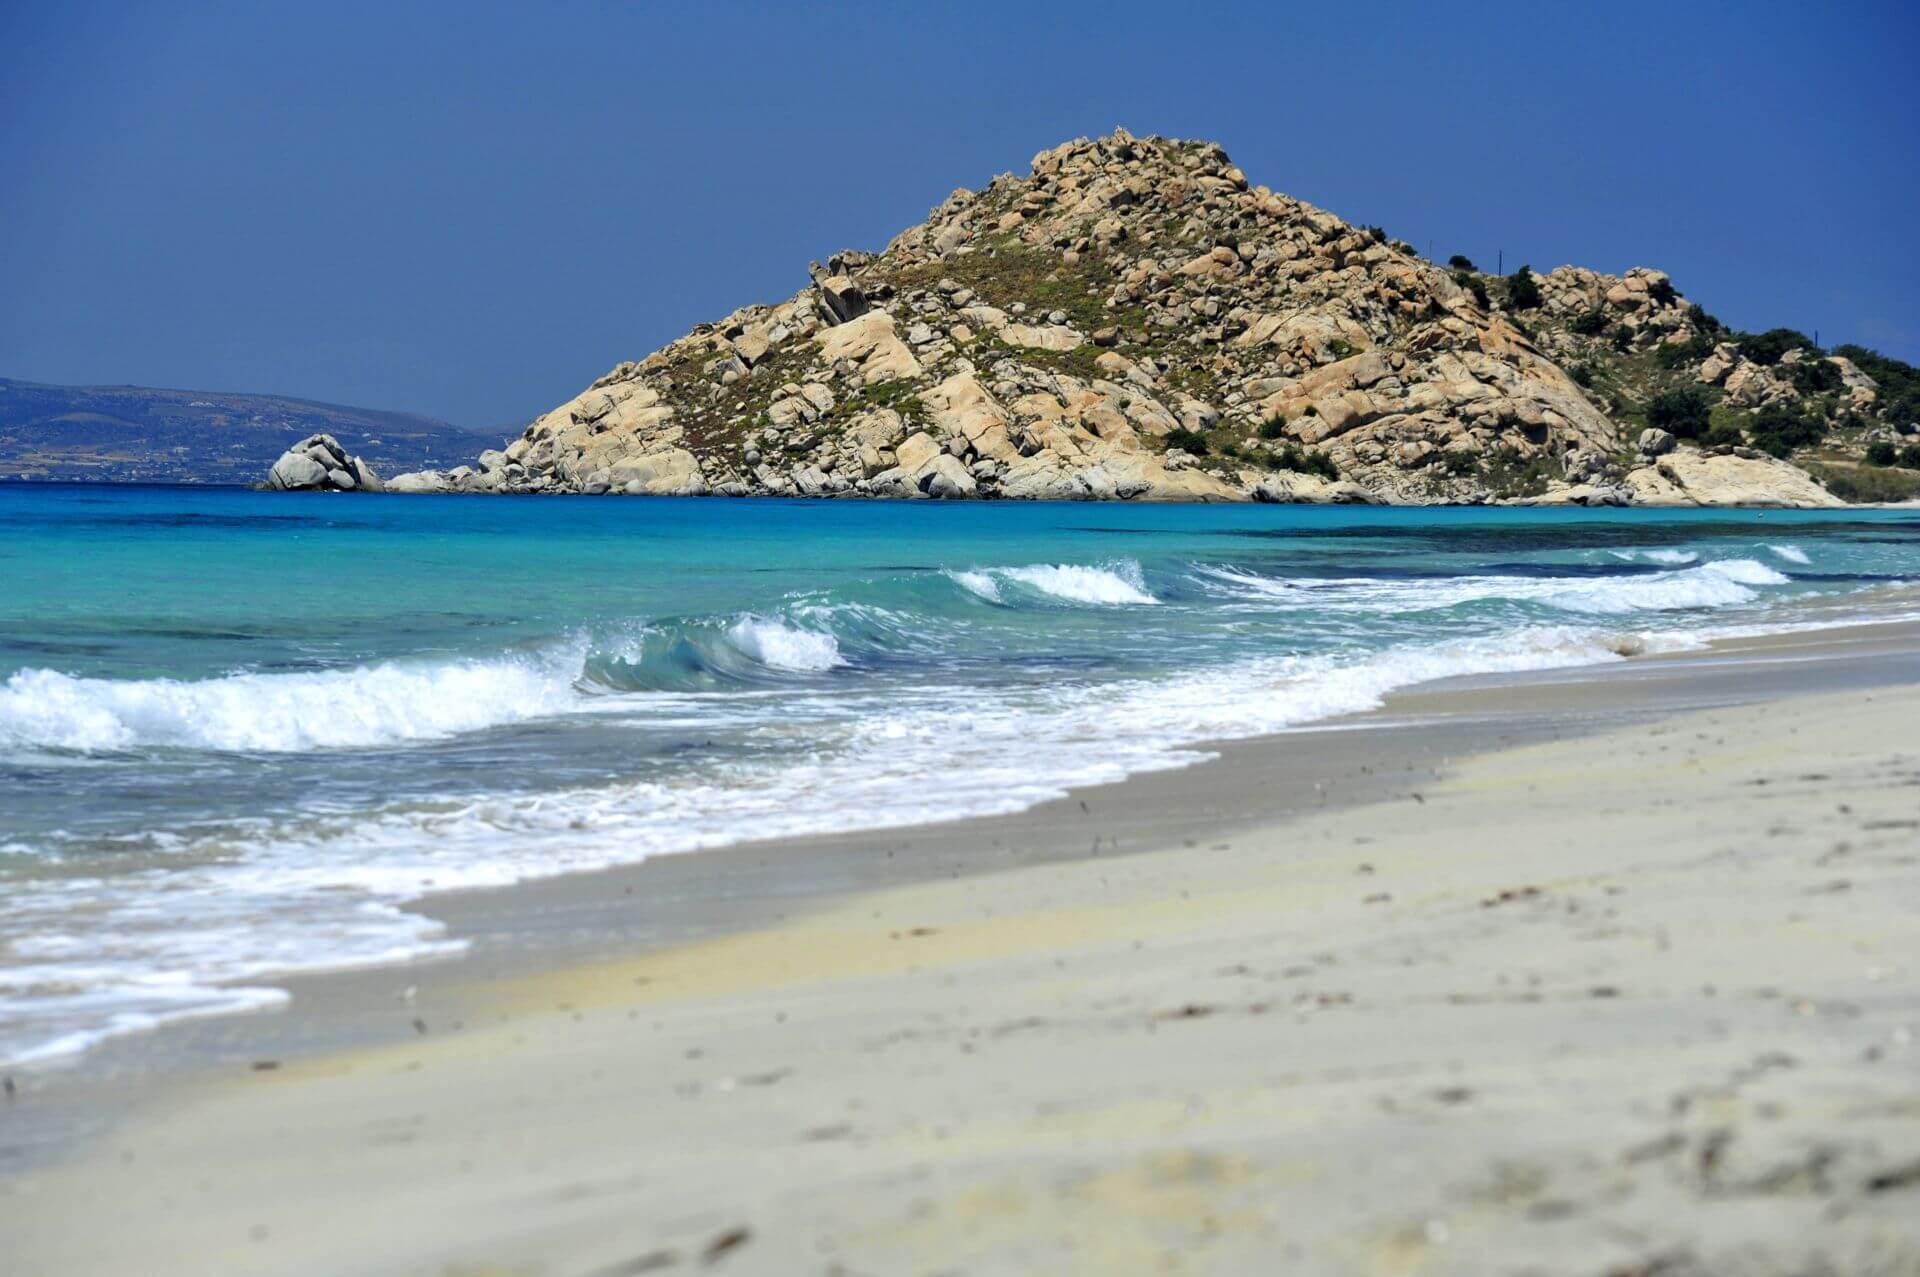 Cyclades islands: The beach of Mikri Vigla in Naxos